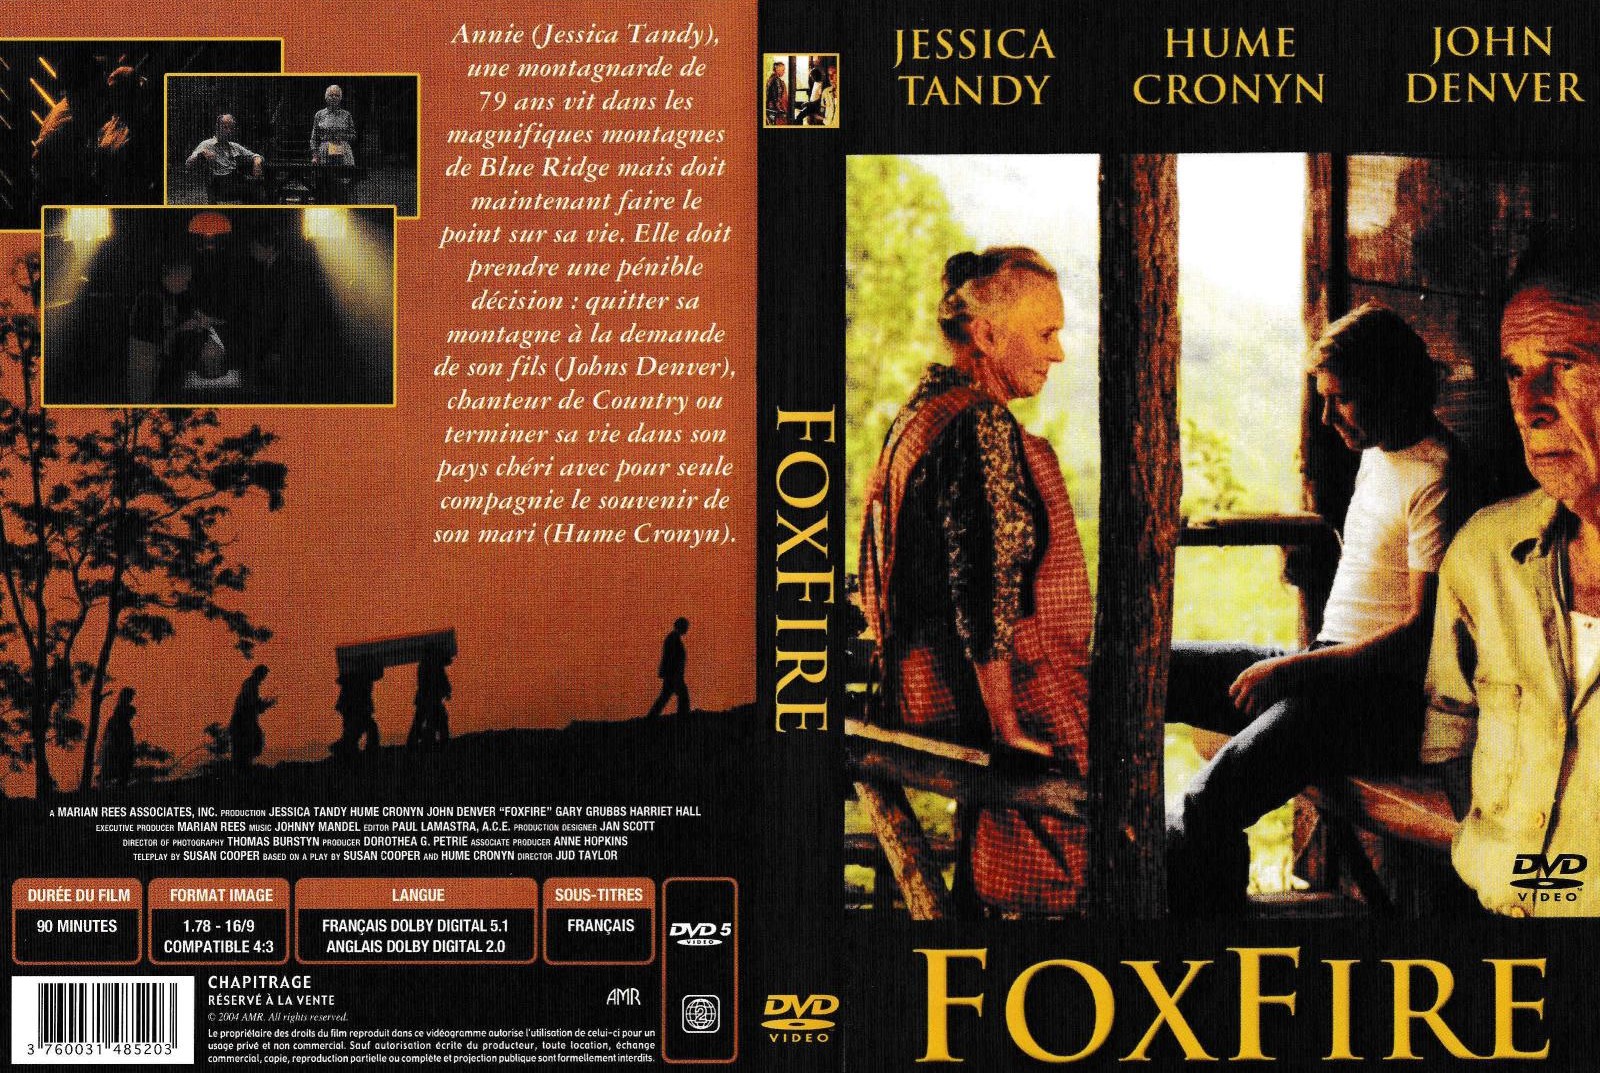 Jaquette DVD Foxfire (2004)